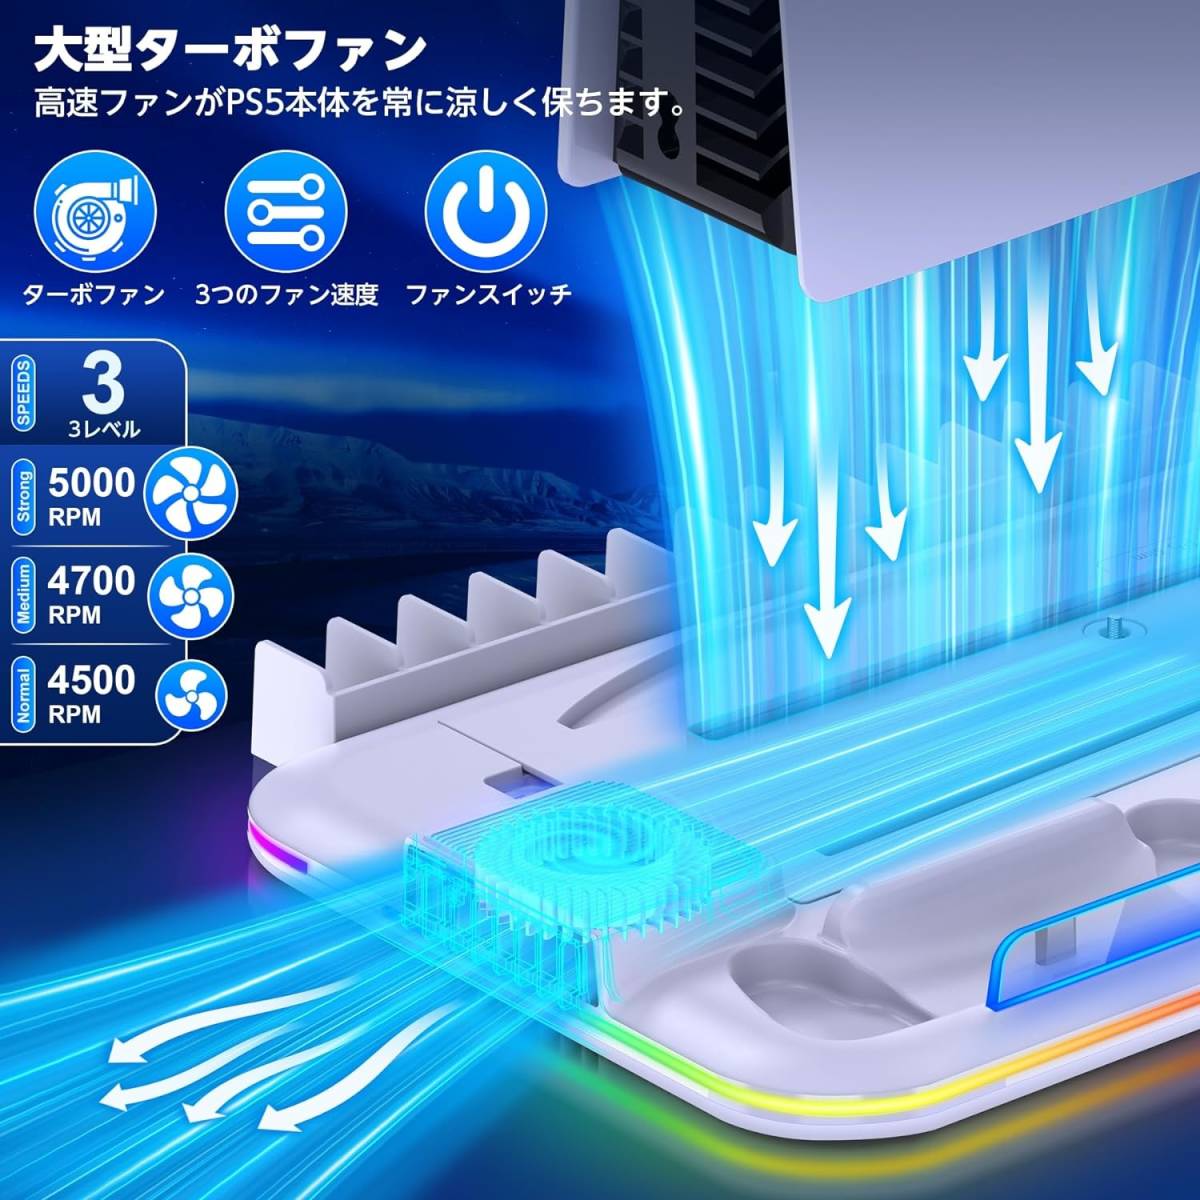 PS5スタンド PS5 縦置き 冷却 スタンド PS5 コントローラー 充電スタンド 2台同時充電 3段階冷却 